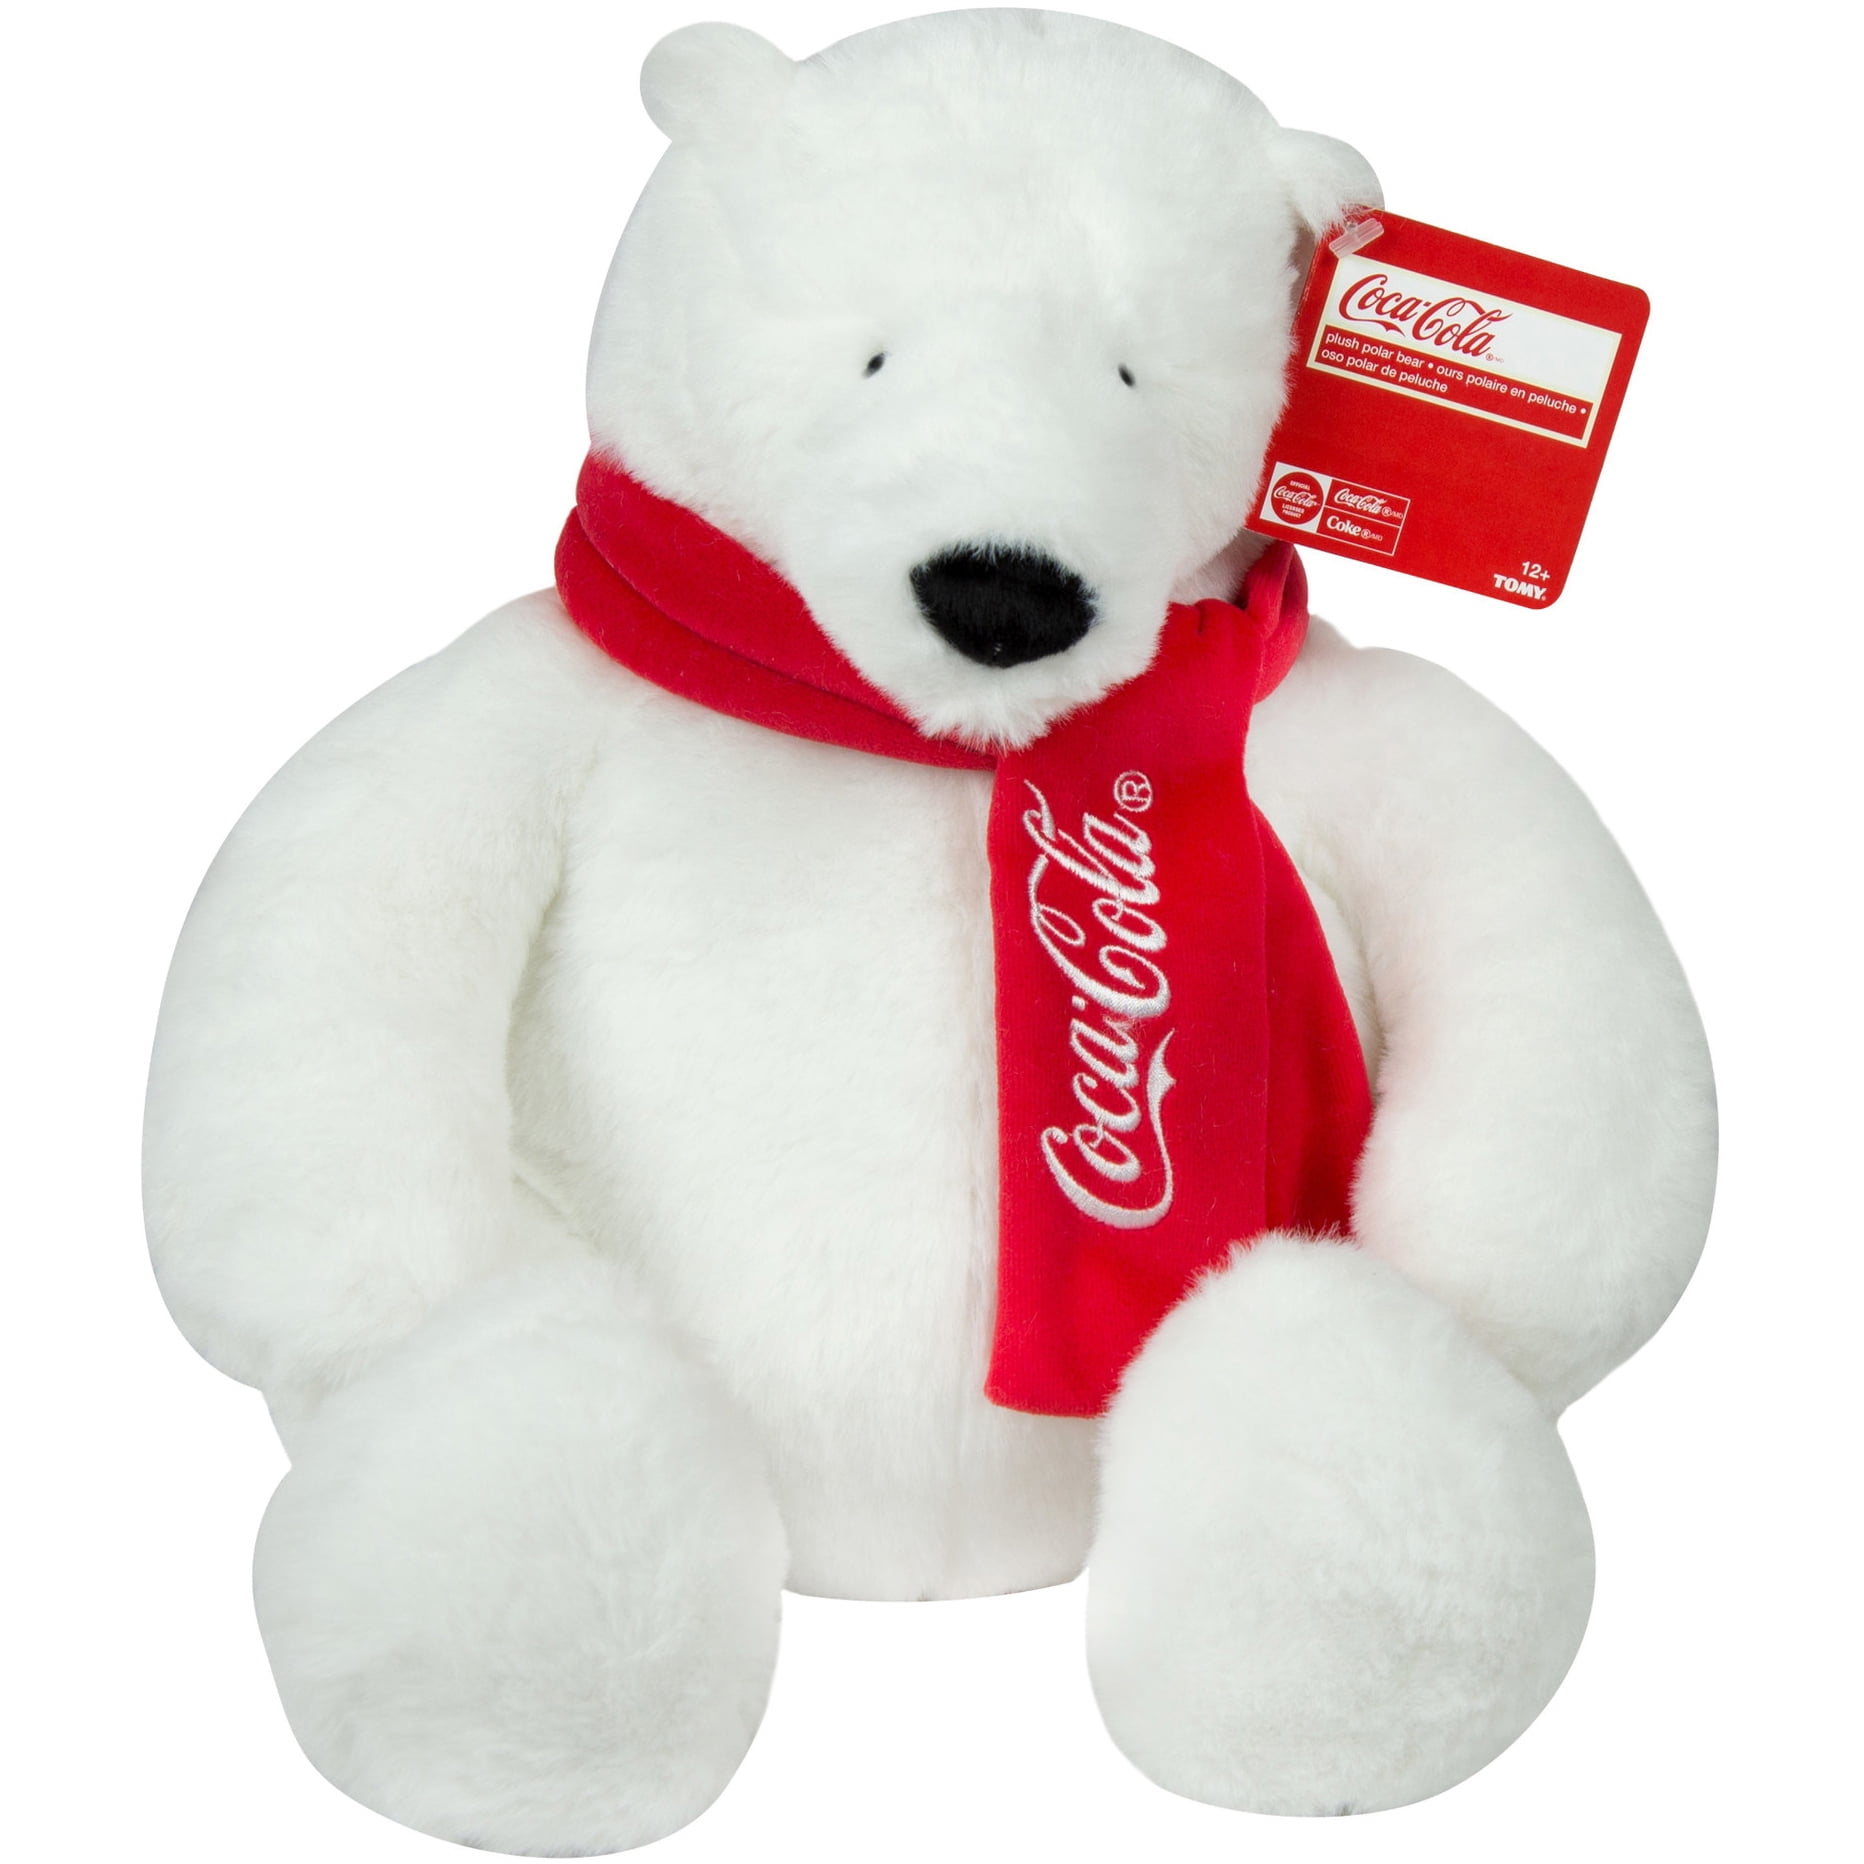 Coca-Cola Polar Bear Supersoft Fleece Blanket 55 x 70 Throw BRAND NEW 